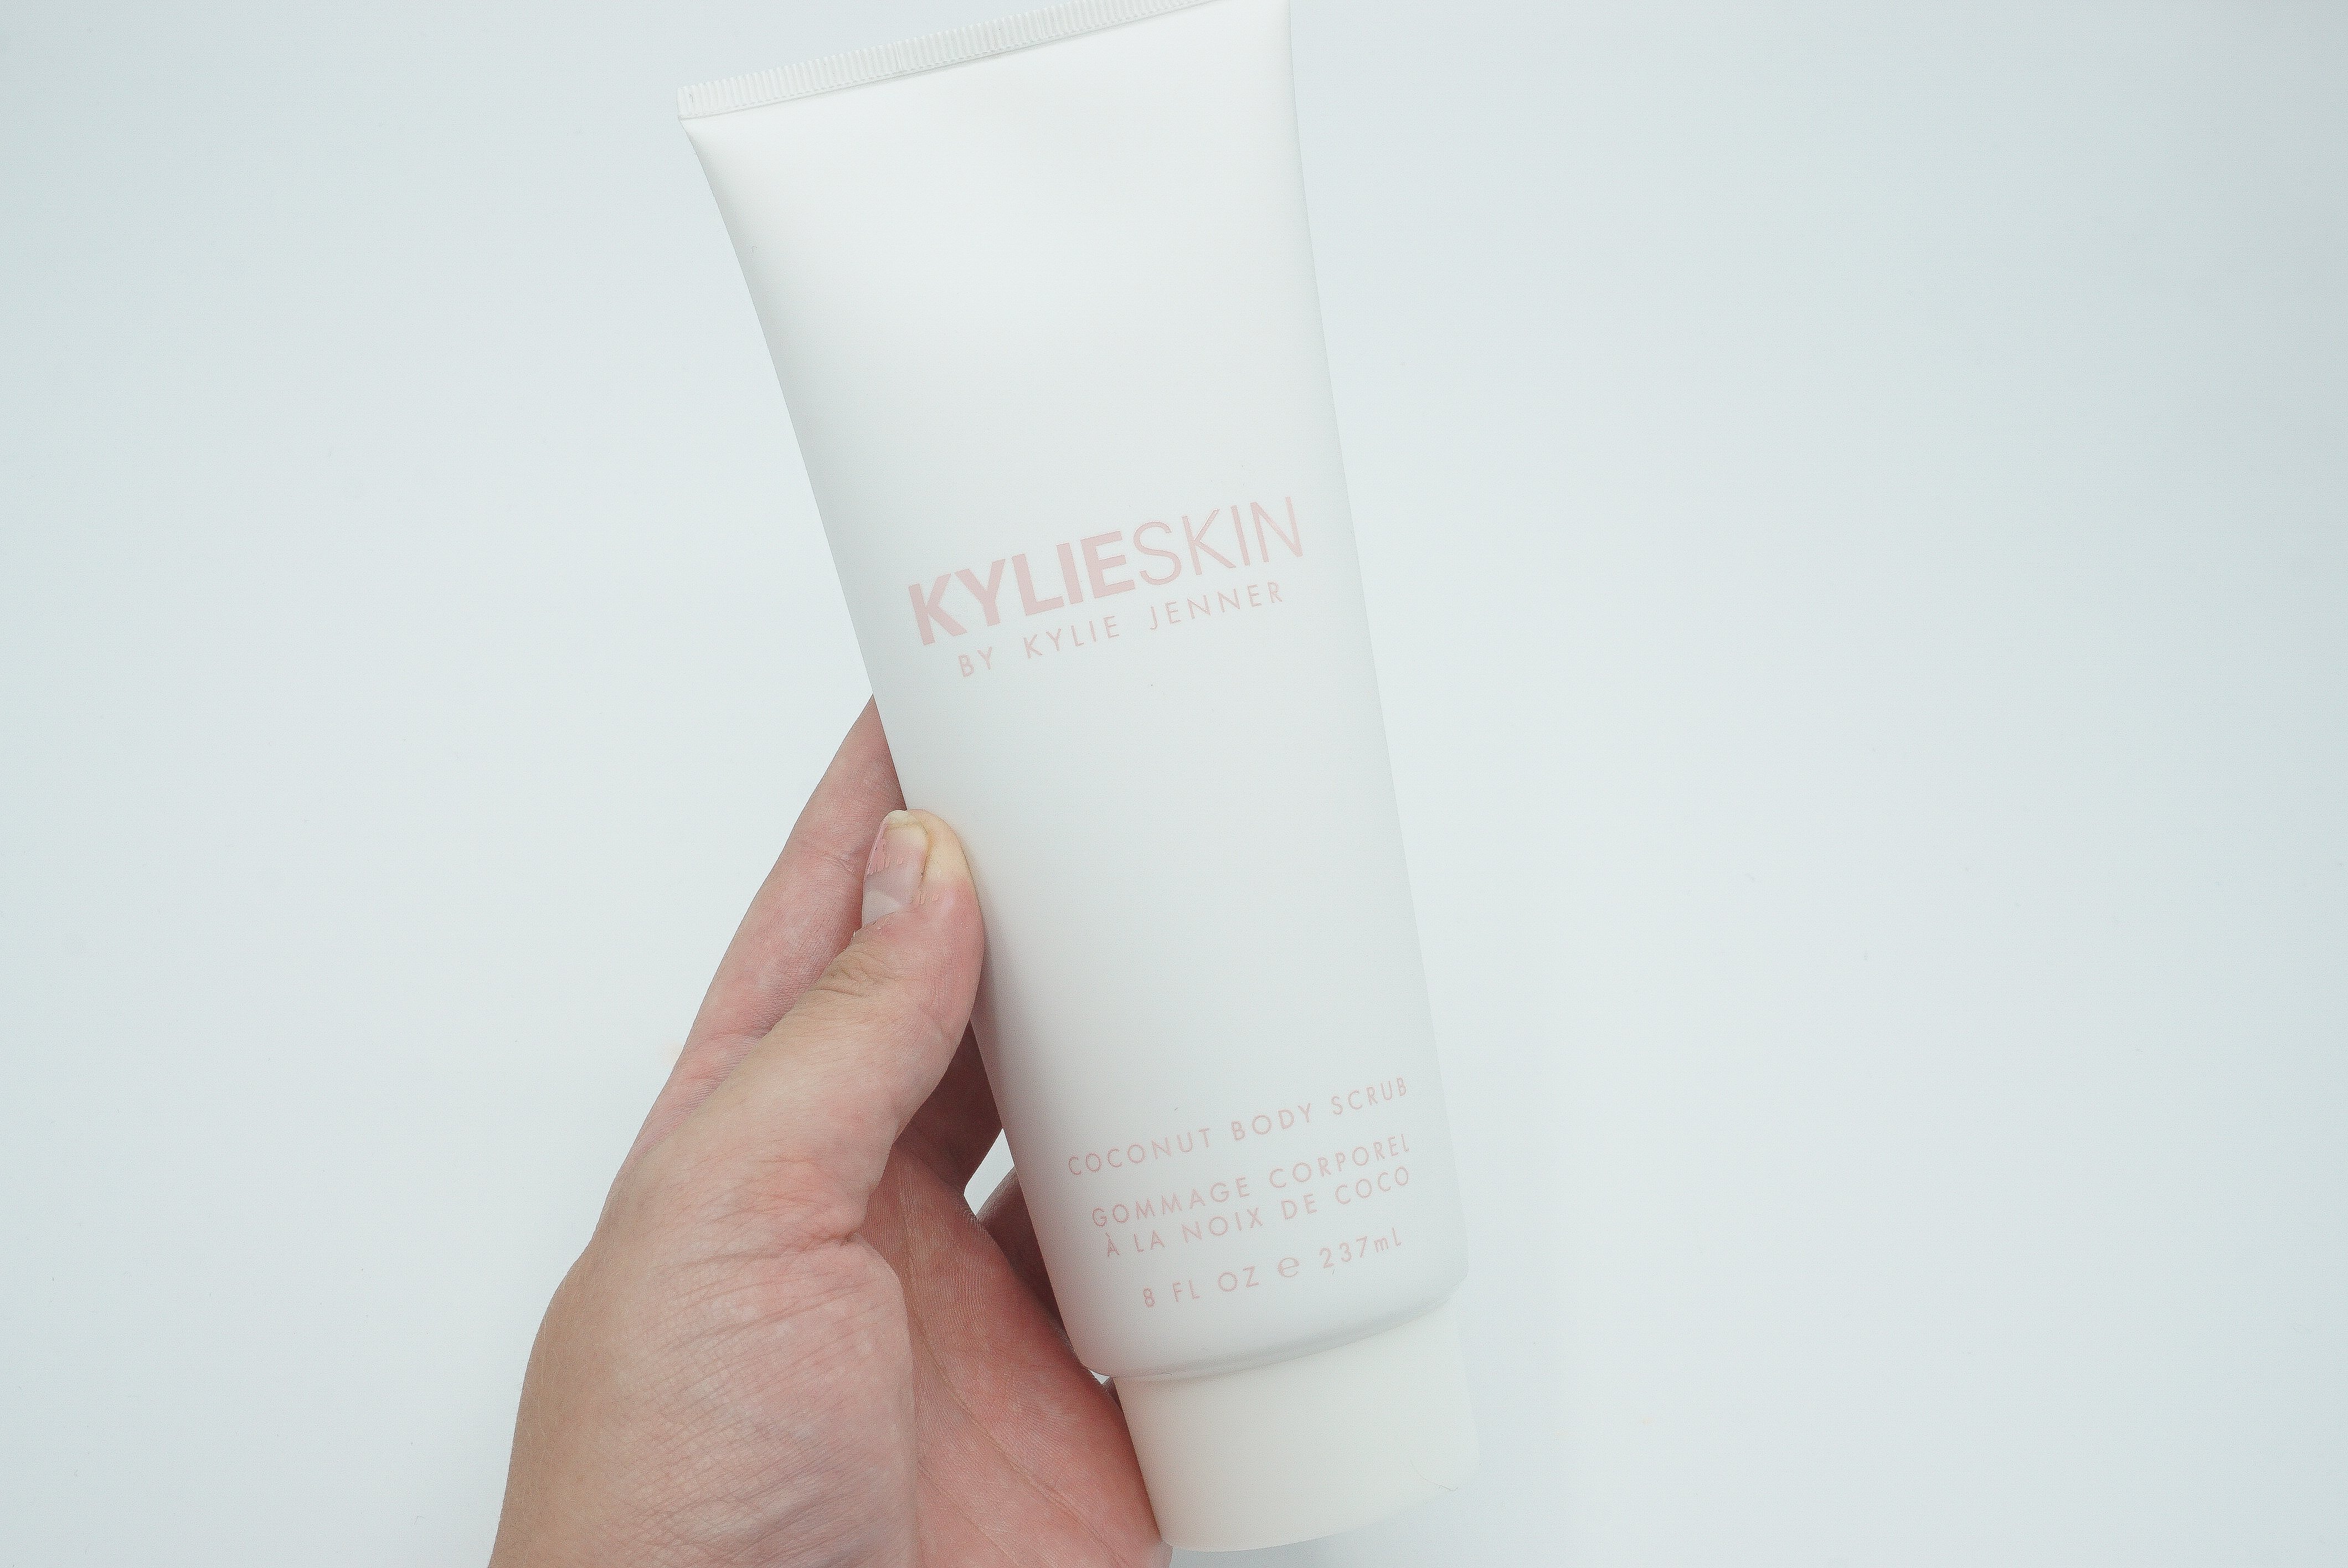 Kylie Skin Coconut Body Lotion and Body Scrub Review